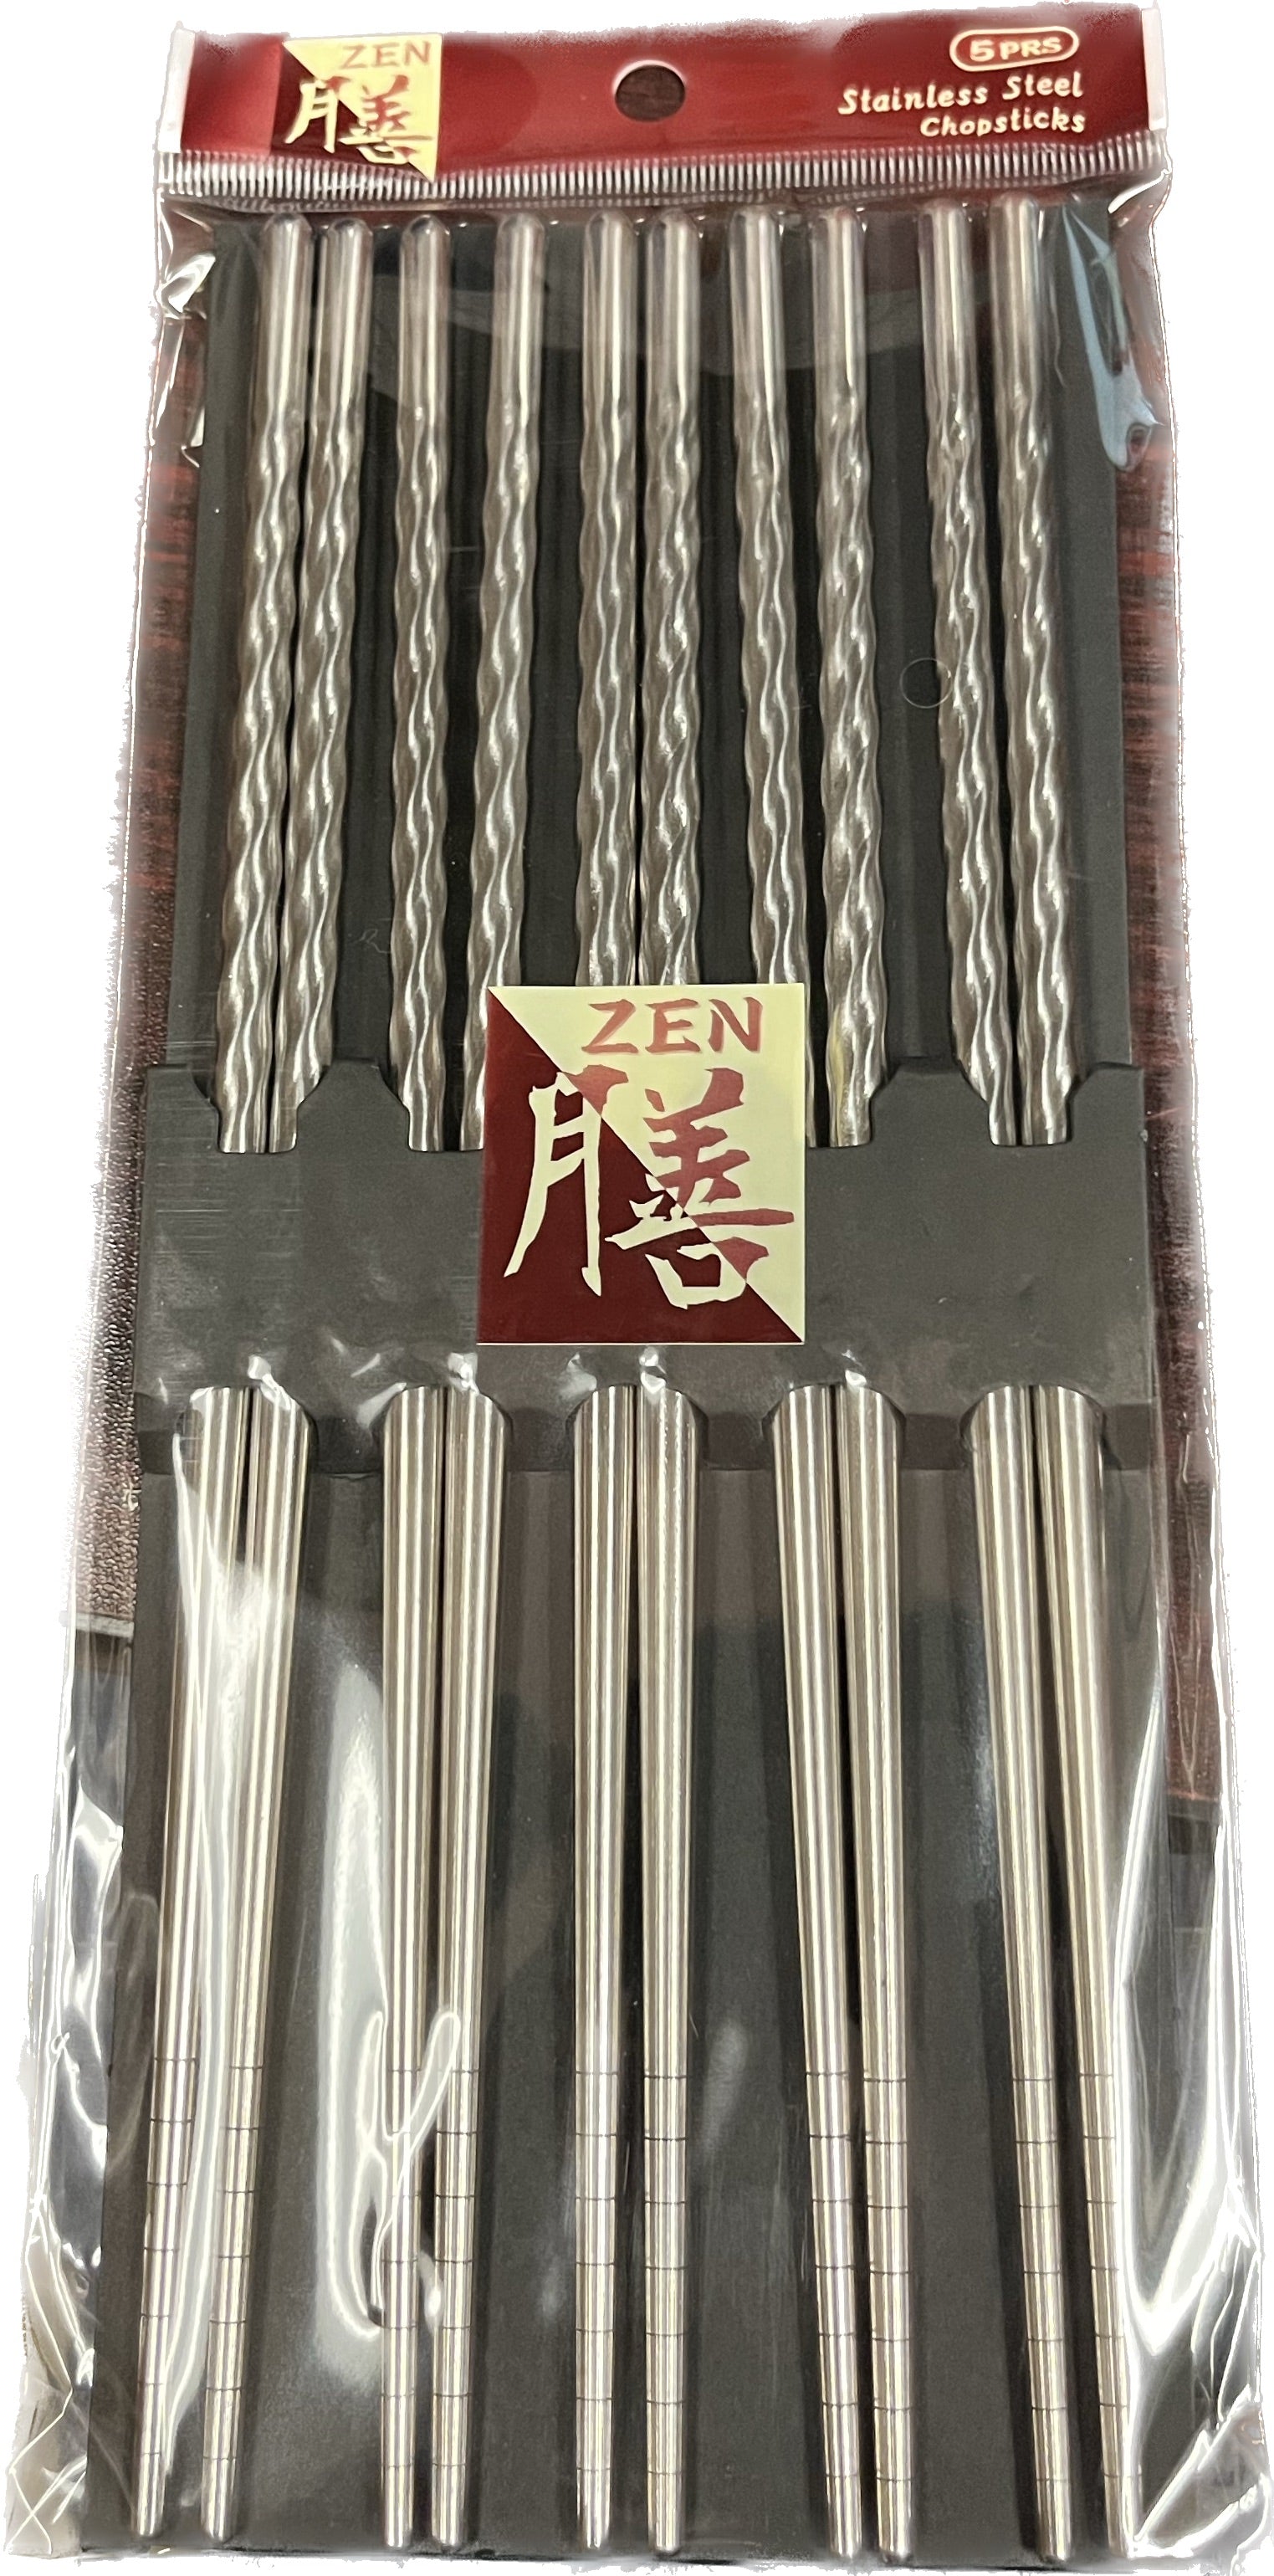 Zen Stainless Steel Chopsticks - 5 Pairs